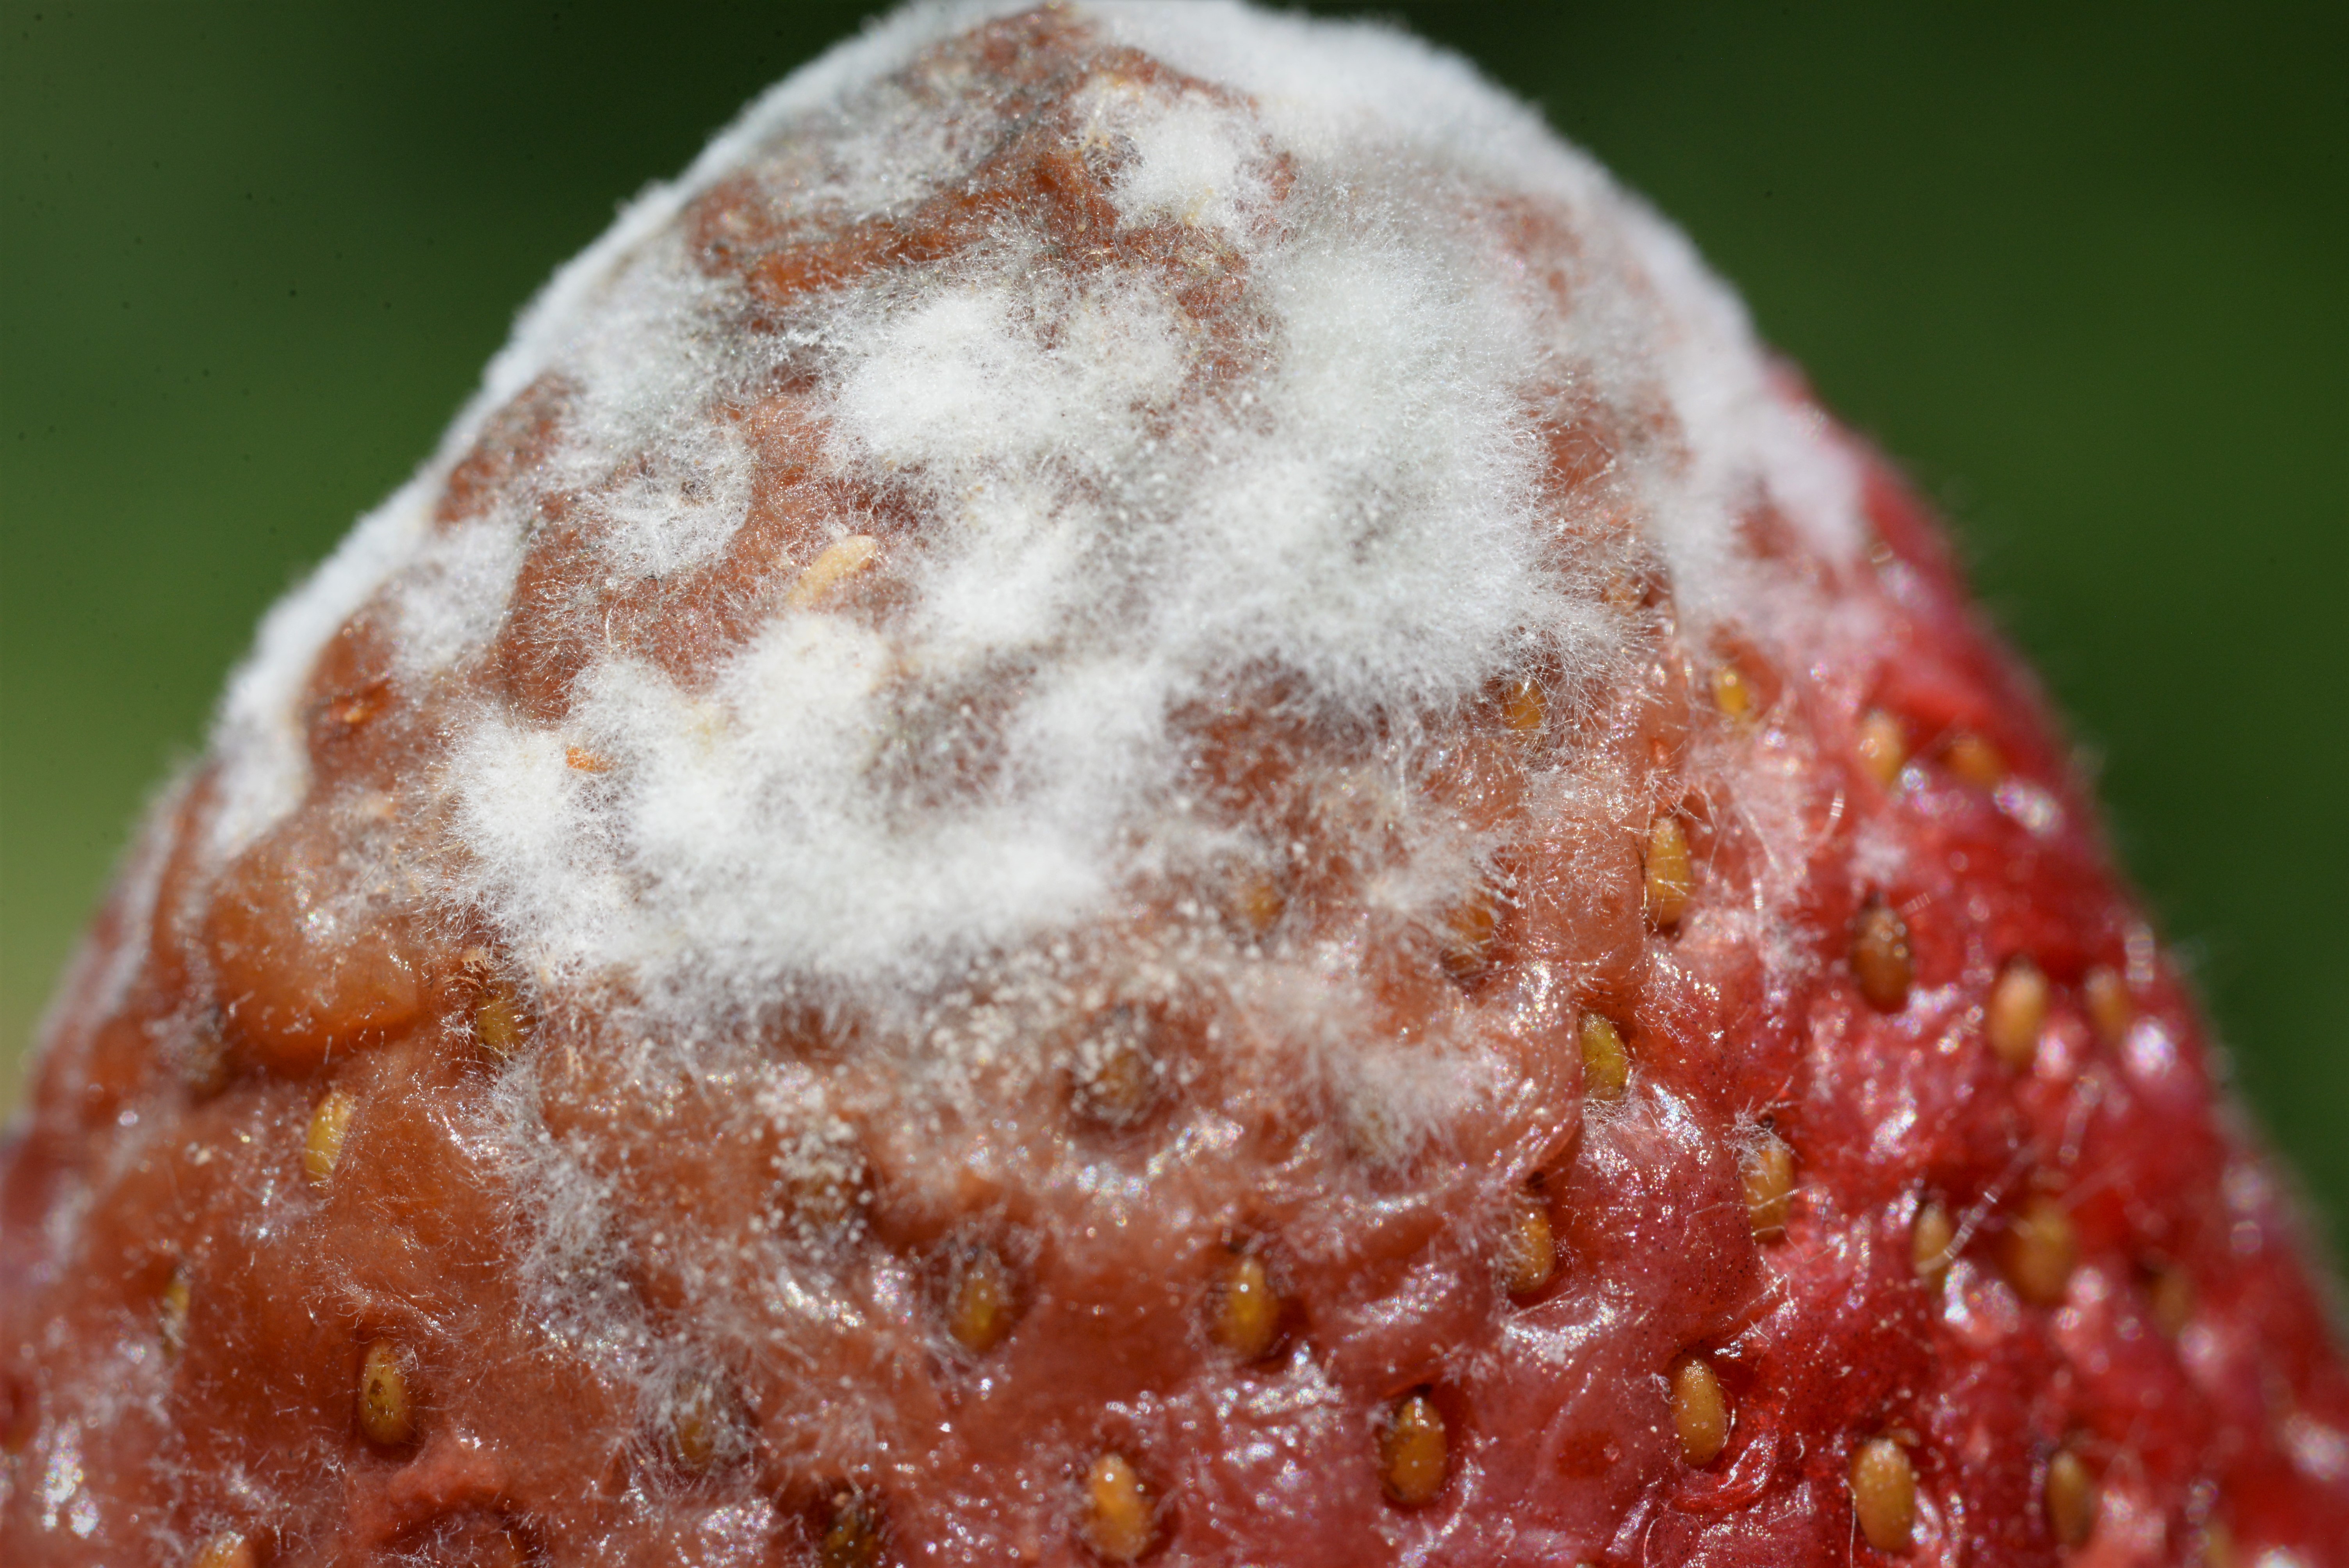 File:Strawberry mold.jpg - Wikimedia Commons